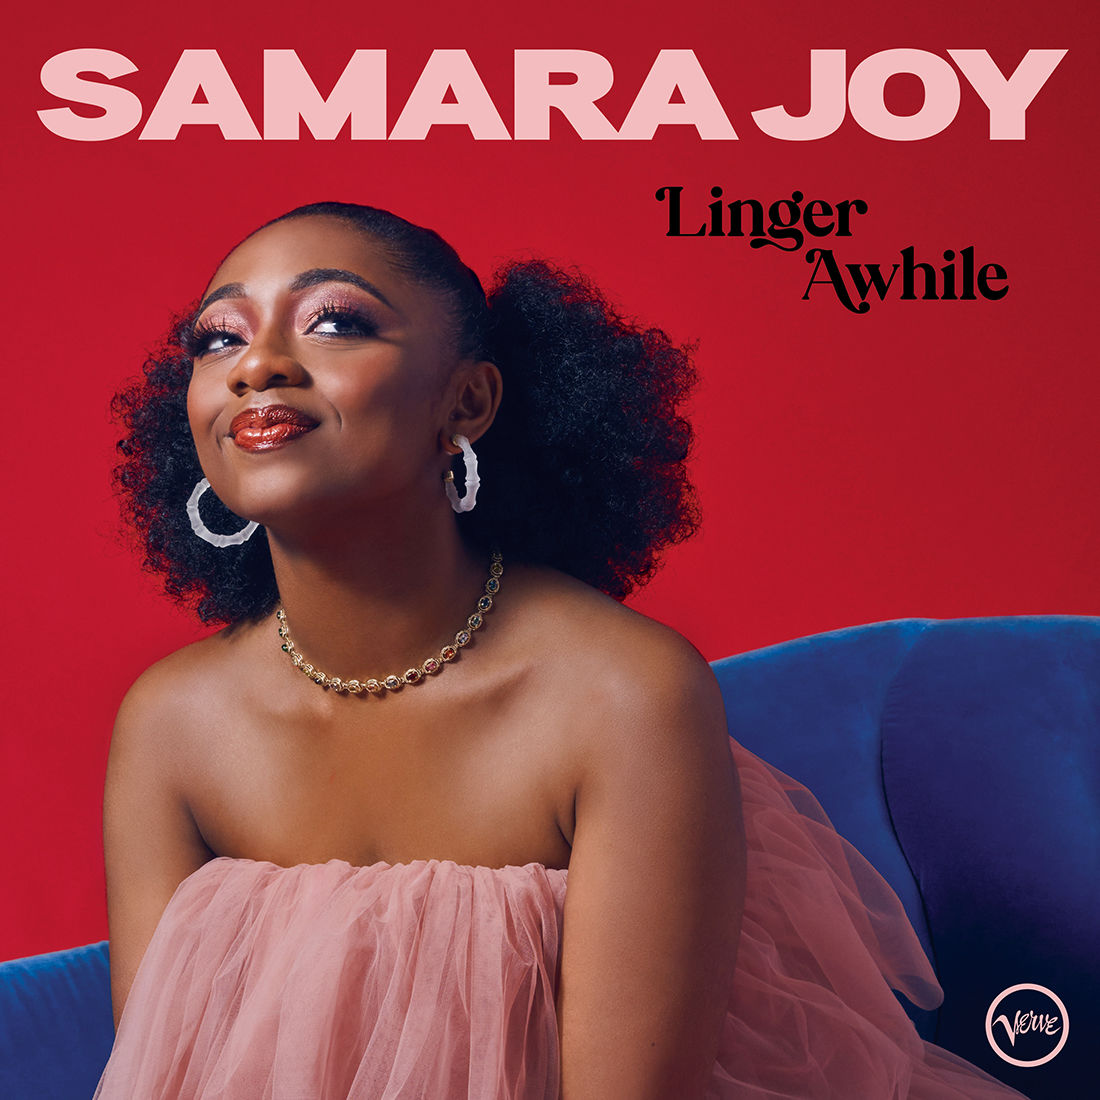 22-Year-Old Vocalist Samara Joy Announces Verve Records Debut  Linger Awhile Out September 16